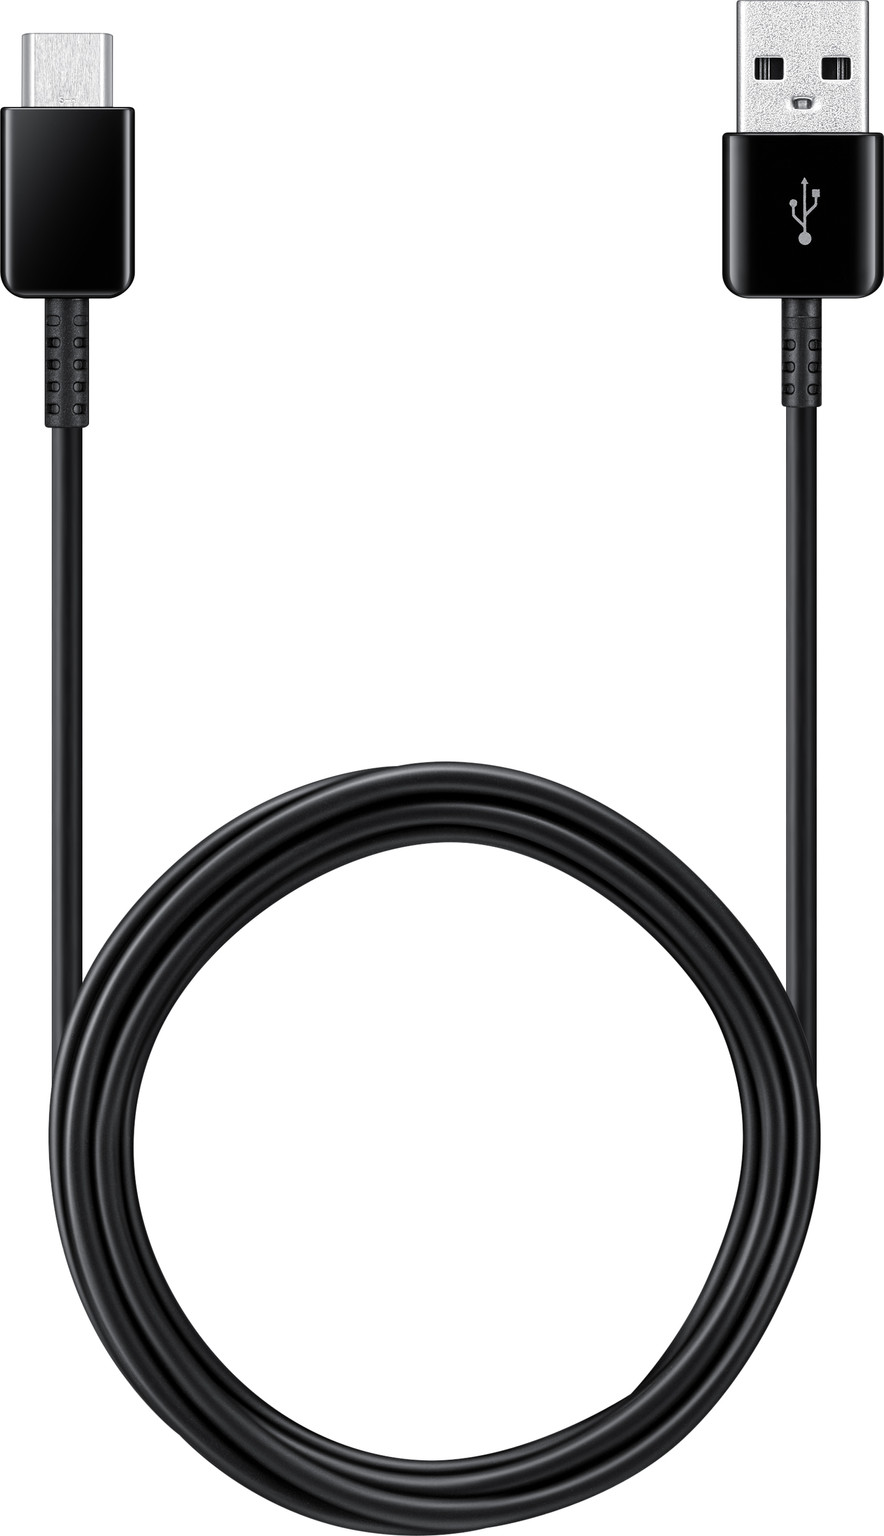 Kinematica Scorch Uitgaan Samsung Galaxy S10 Plus Oplaadkabel USB C 2 meter zwart - Gsm-Oplader.nl